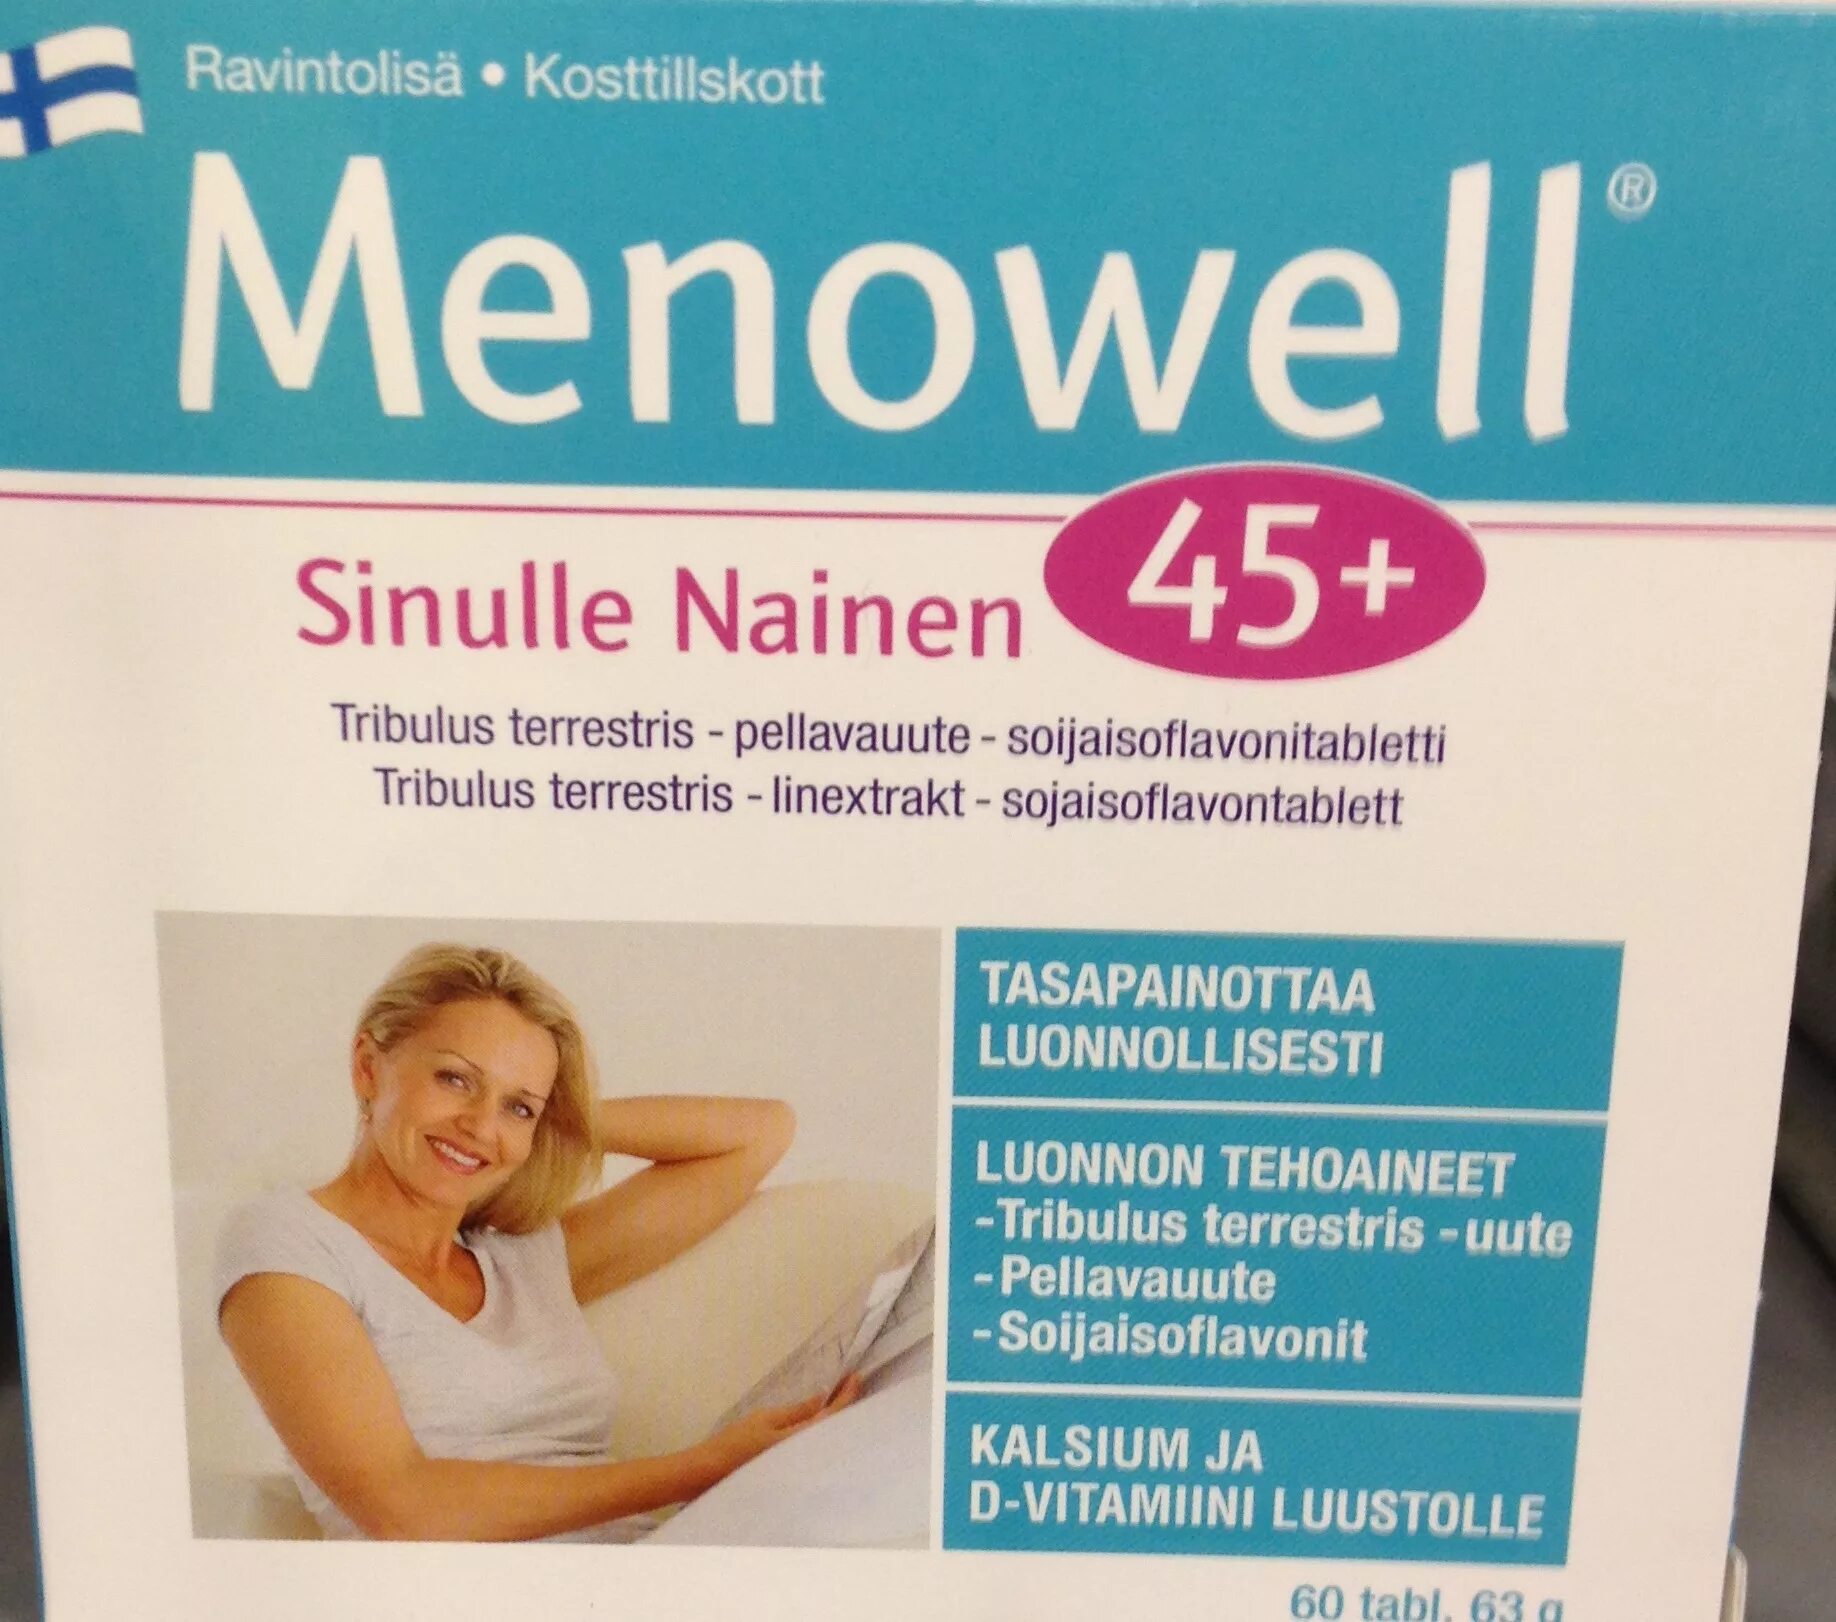 Витамины Menowell 45+. Менопауза витамины menopause. Витамины из Финляндии 45+. Женские витамины финские.